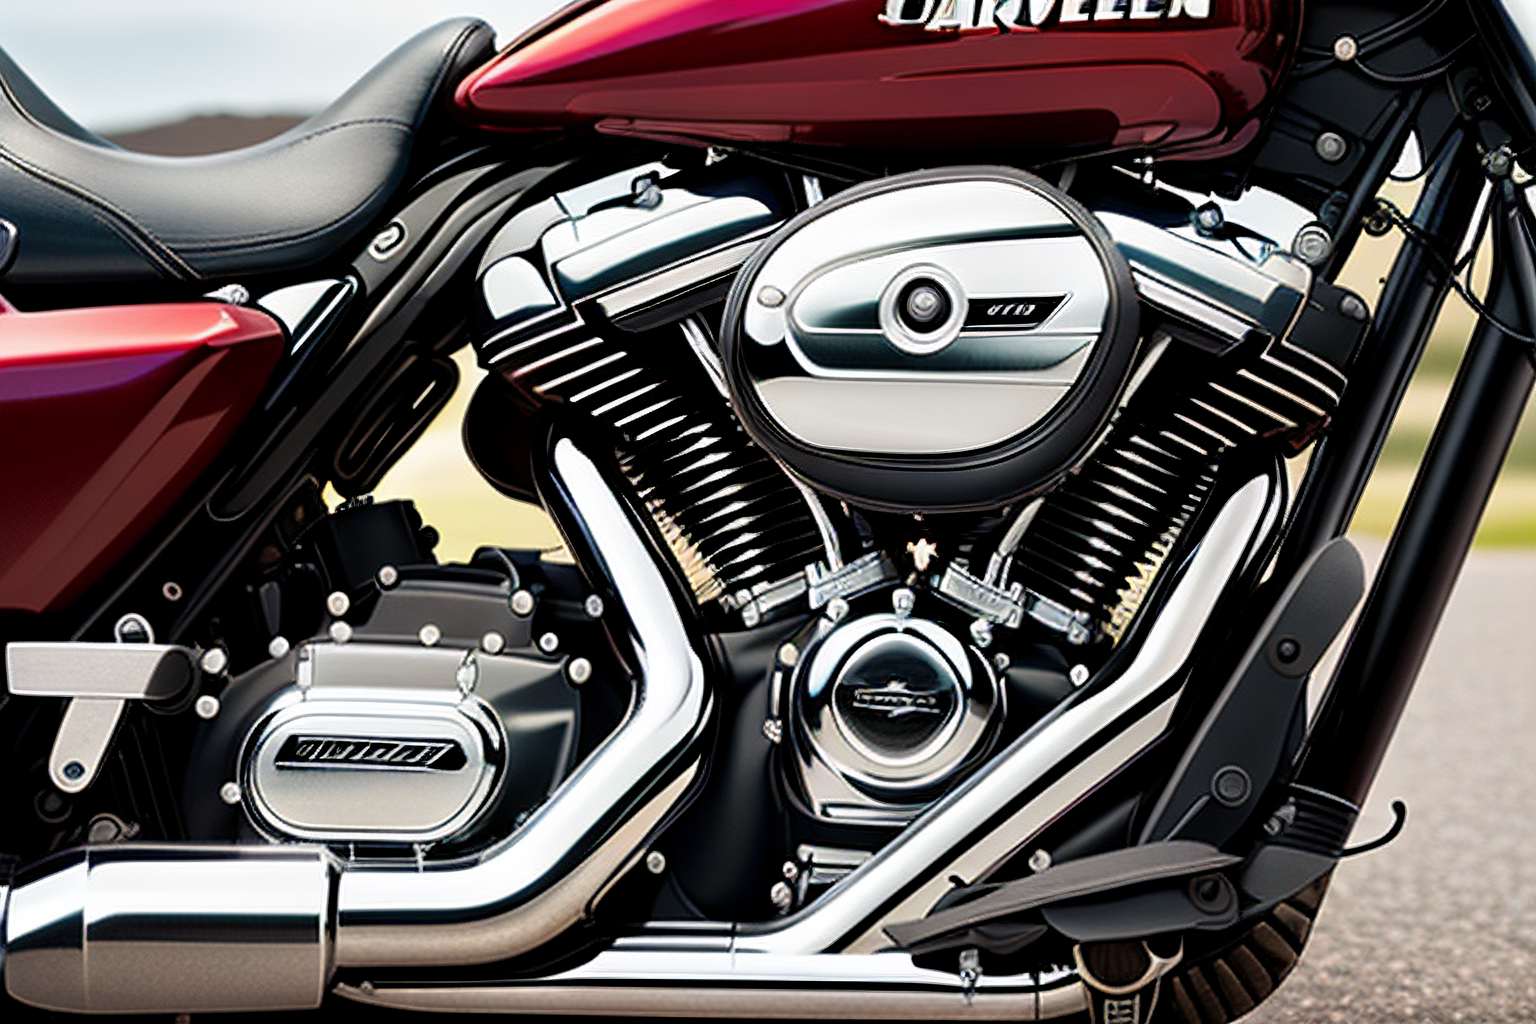 Harley Davidson Clutch Problems: Comprehensive Guide